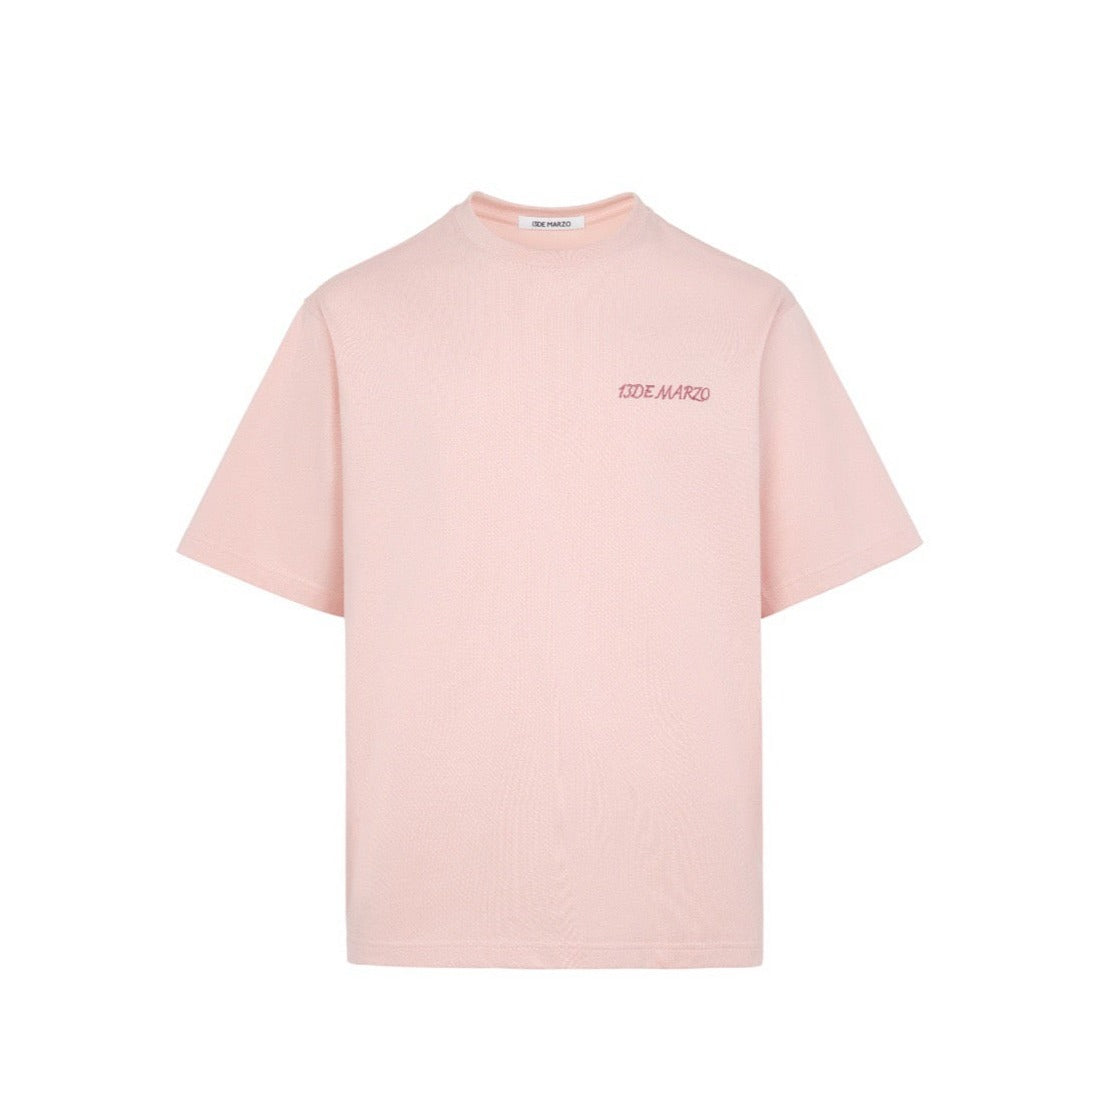 13DE MARZO Doozoo Rose – Original Luminous Veiled Fixxshop T-shirt